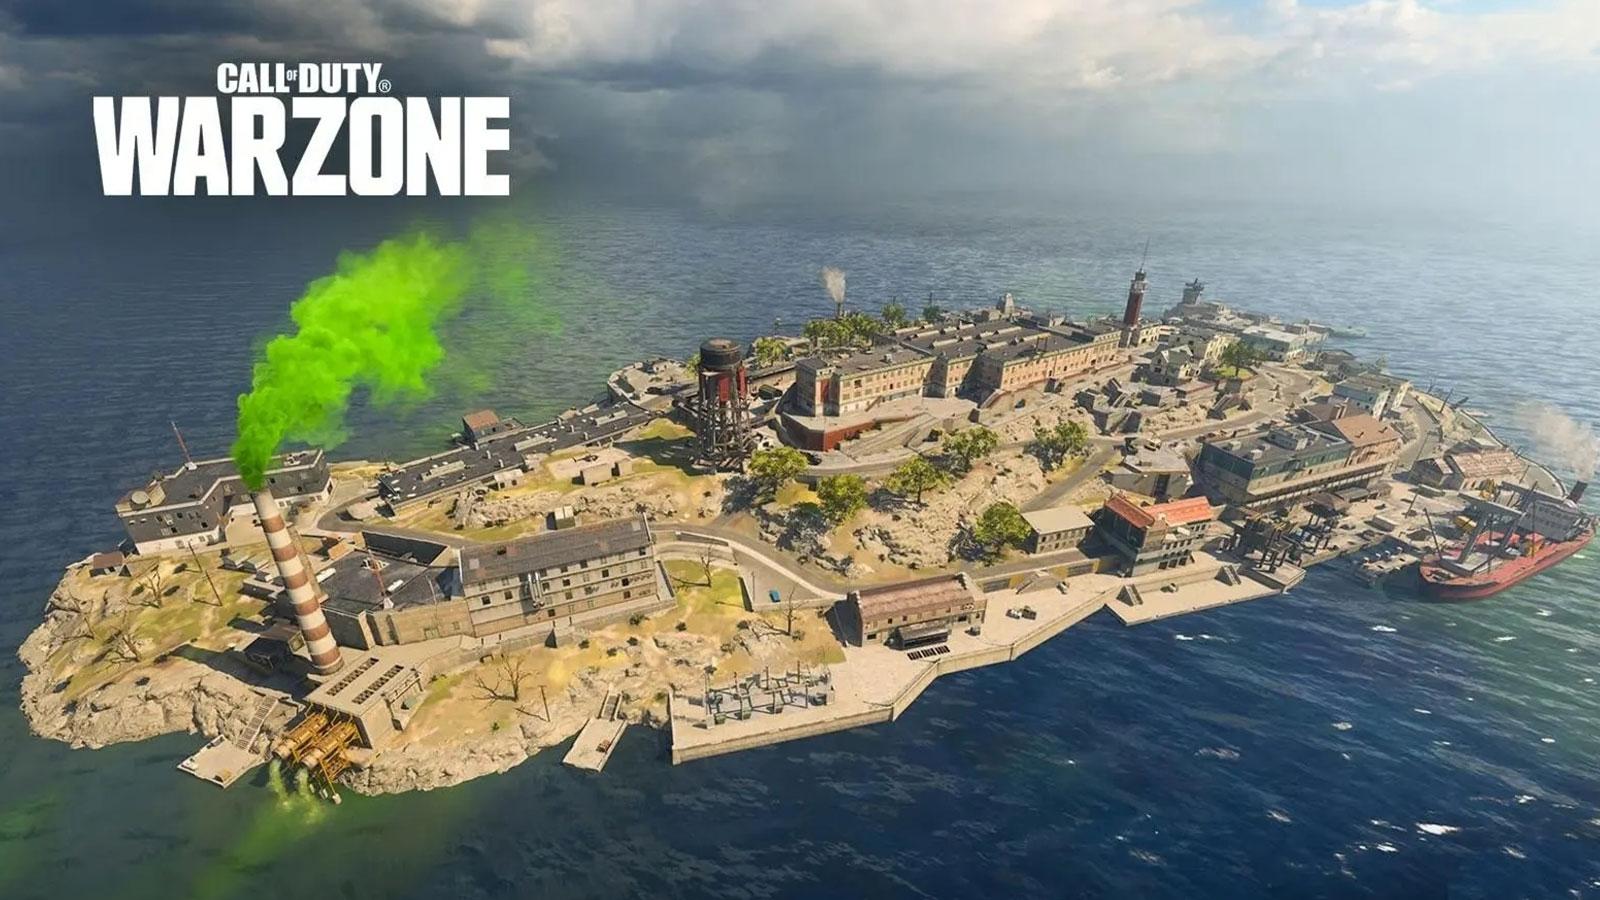 Carte Rebirth Island Warzone